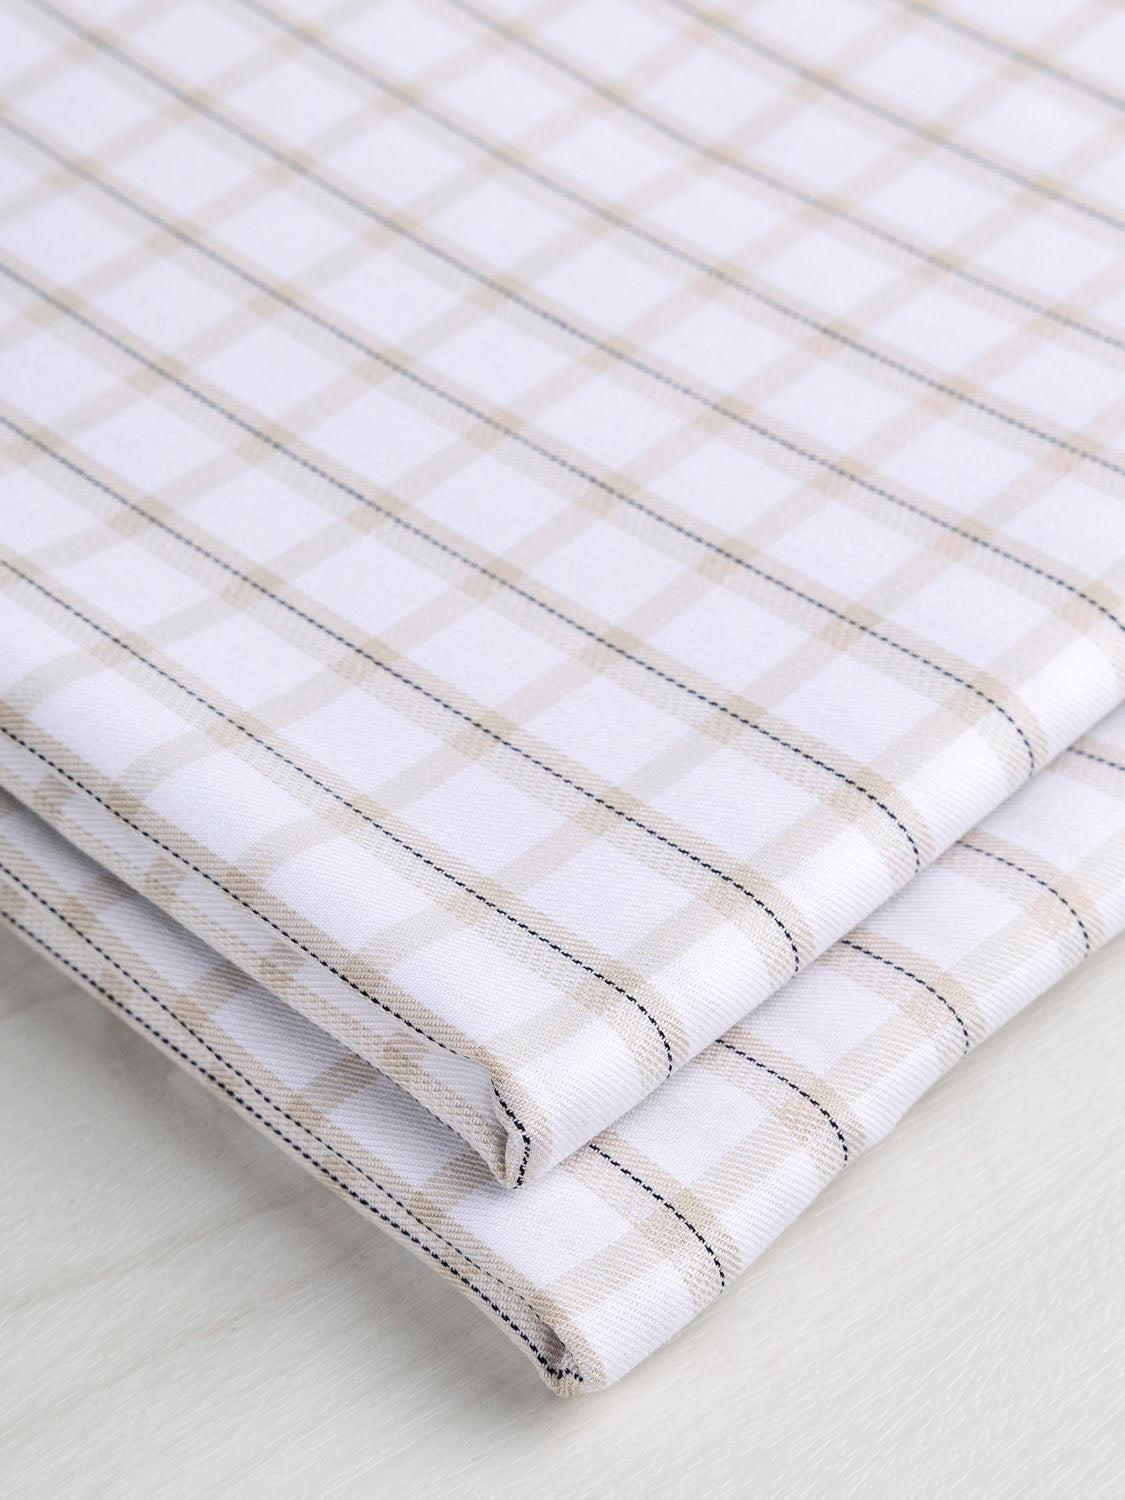 Yarn Dyed Checkered Stripe Cotton Twill - White + Beige + Black | Core Fabrics